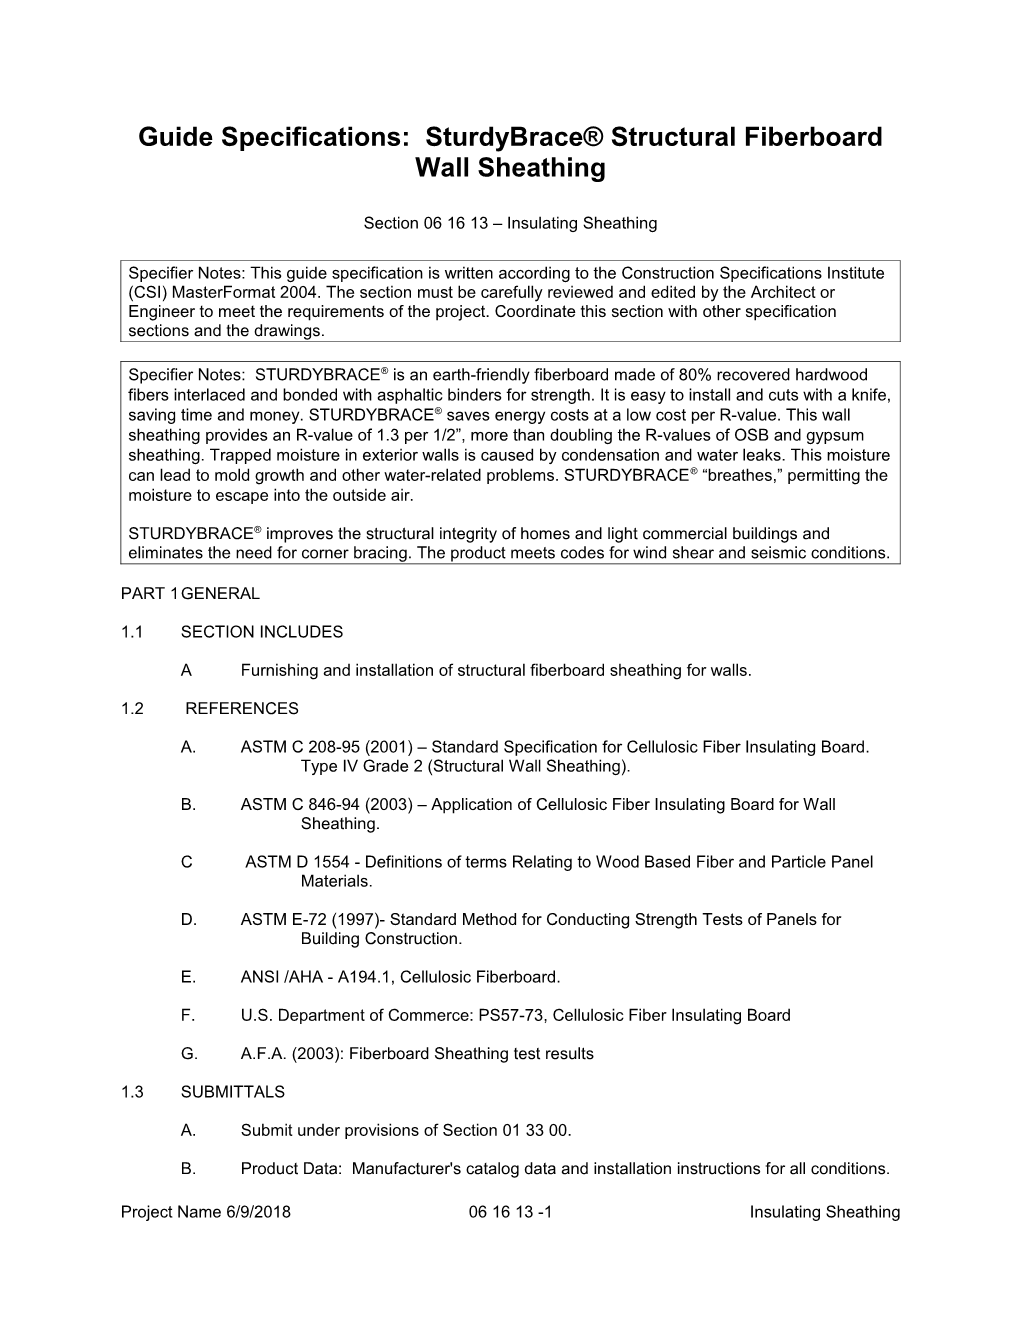 Guide Specifications: Sturdybrace Structural Fiberboard Wall Sheathing